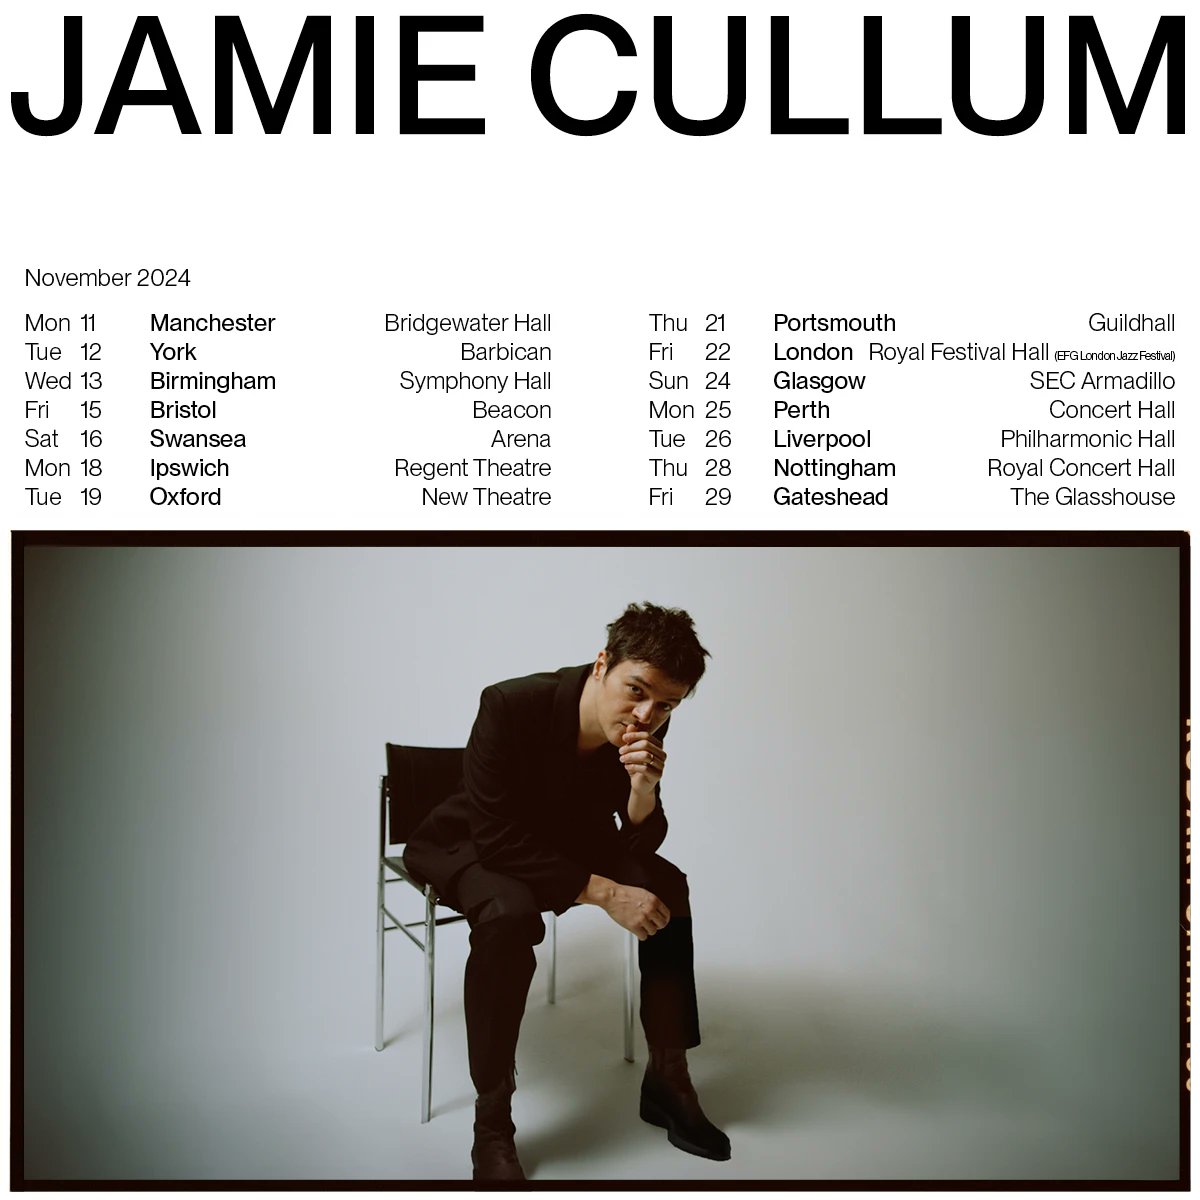 Jamie Cullum at Liverpool Philharmonic Hall Tickets